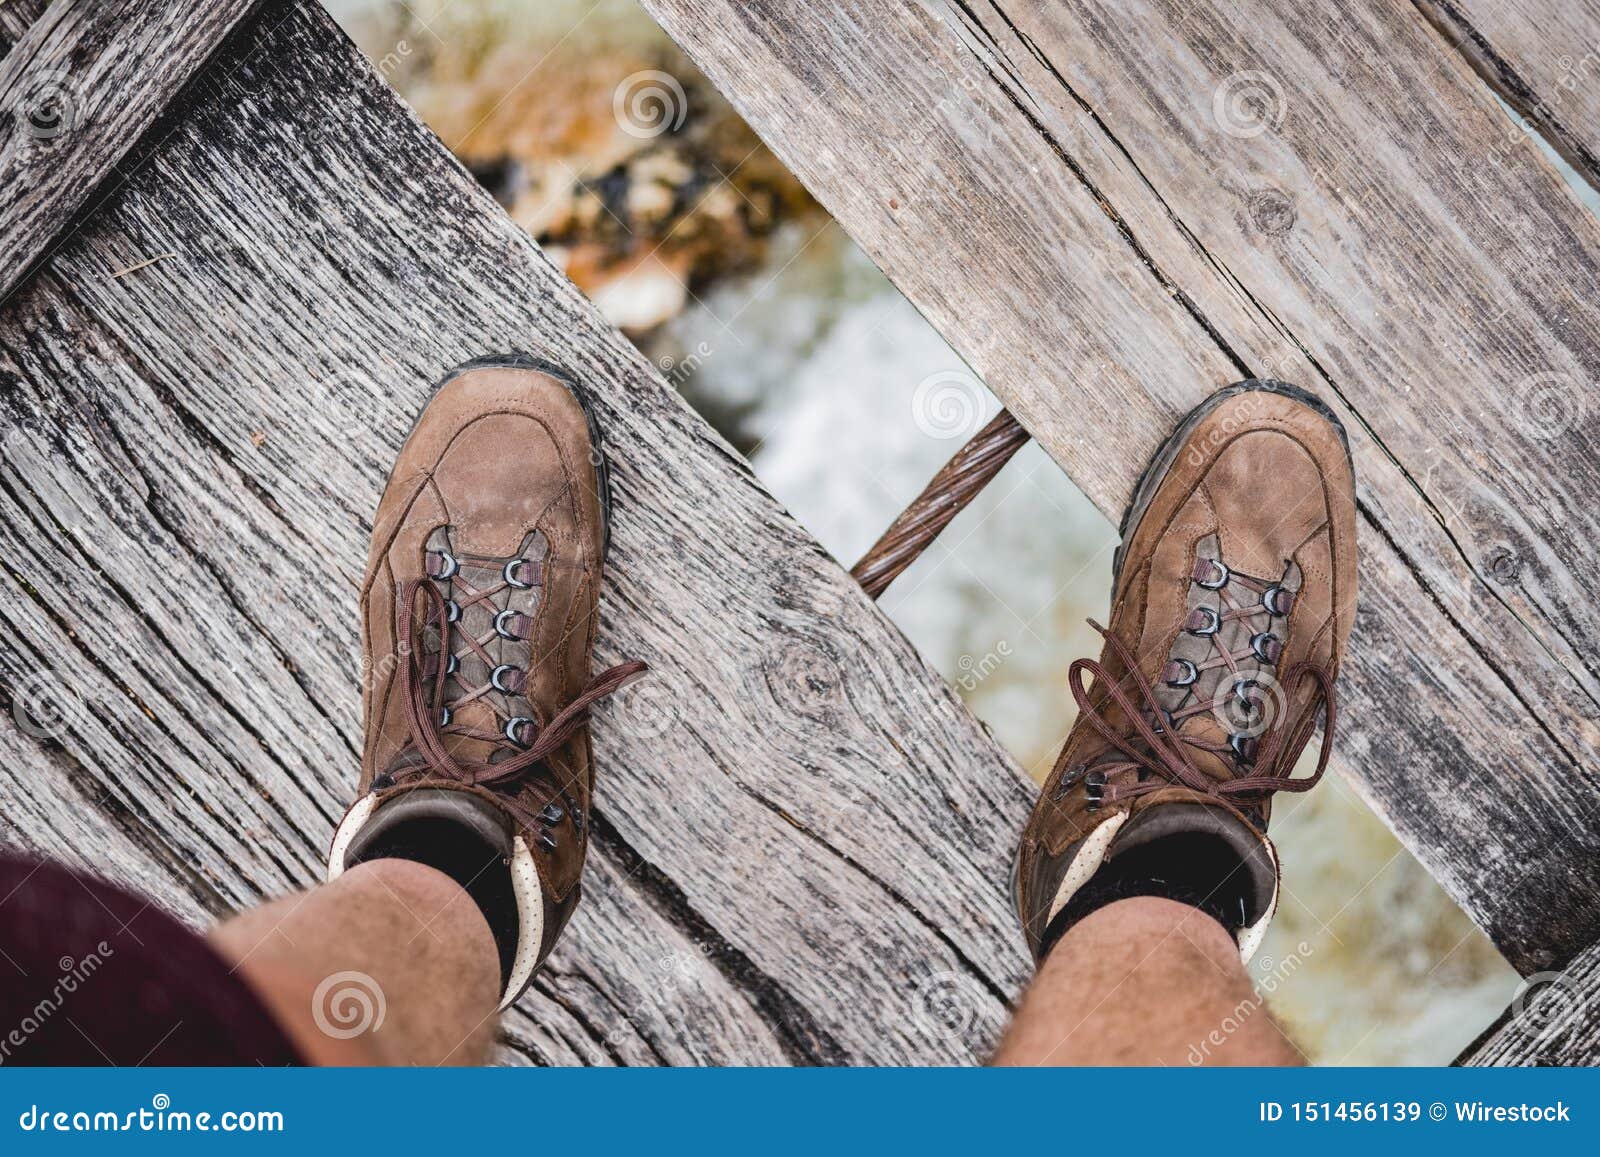 Overhead Shot of a Male Feet Standing on a Wooden Bridge Wearing Hiking ...